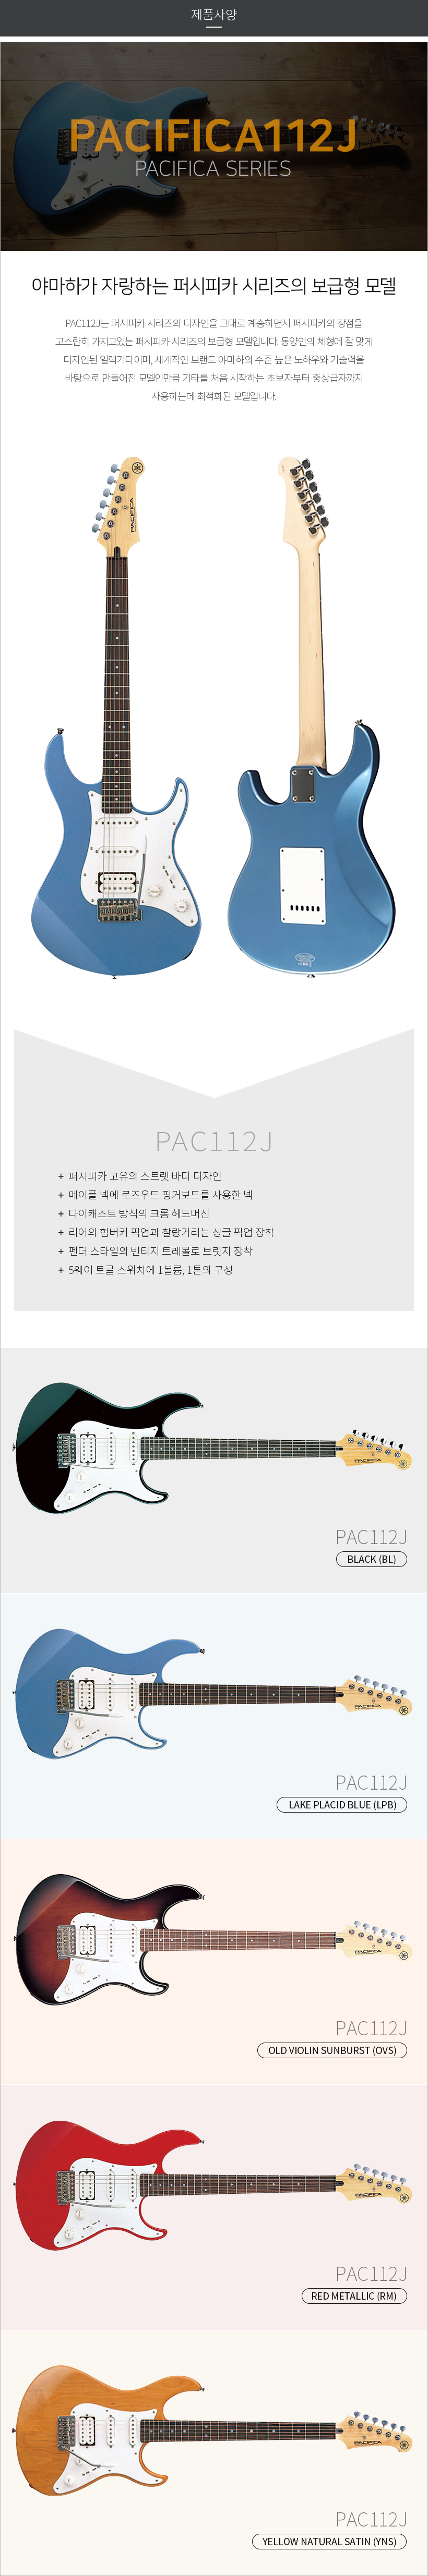 PAC112J 제품 사양